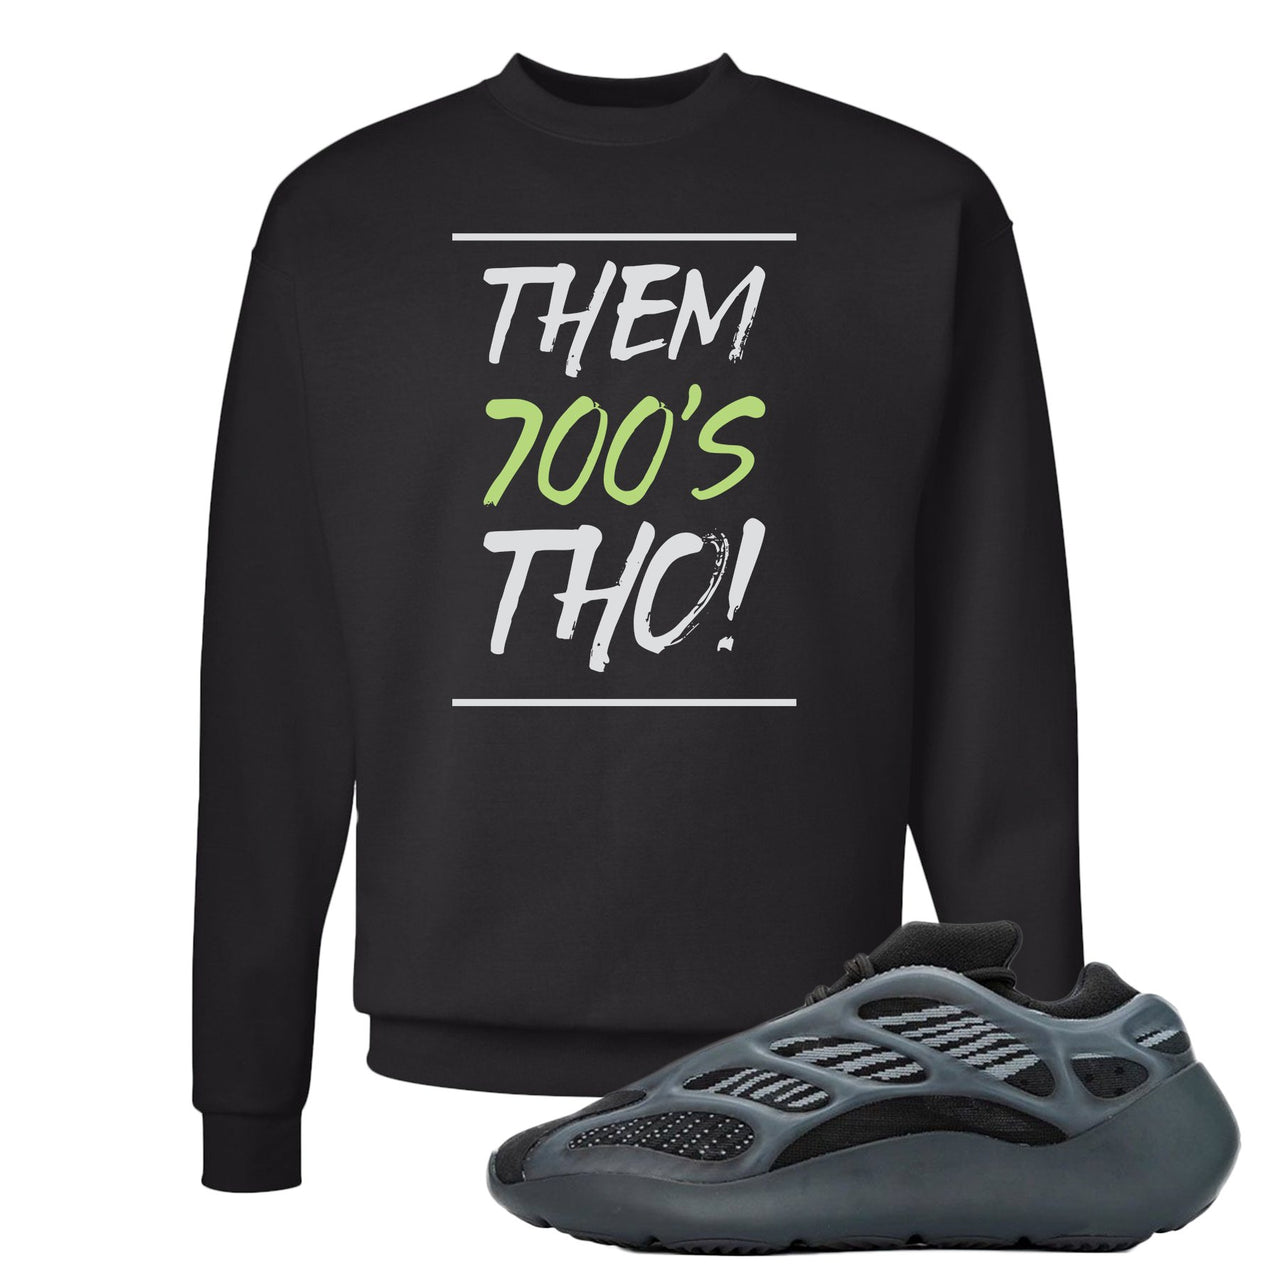 Alvah v3 700s Crewneck Sweatshirt | Them 700's Tho!, Black